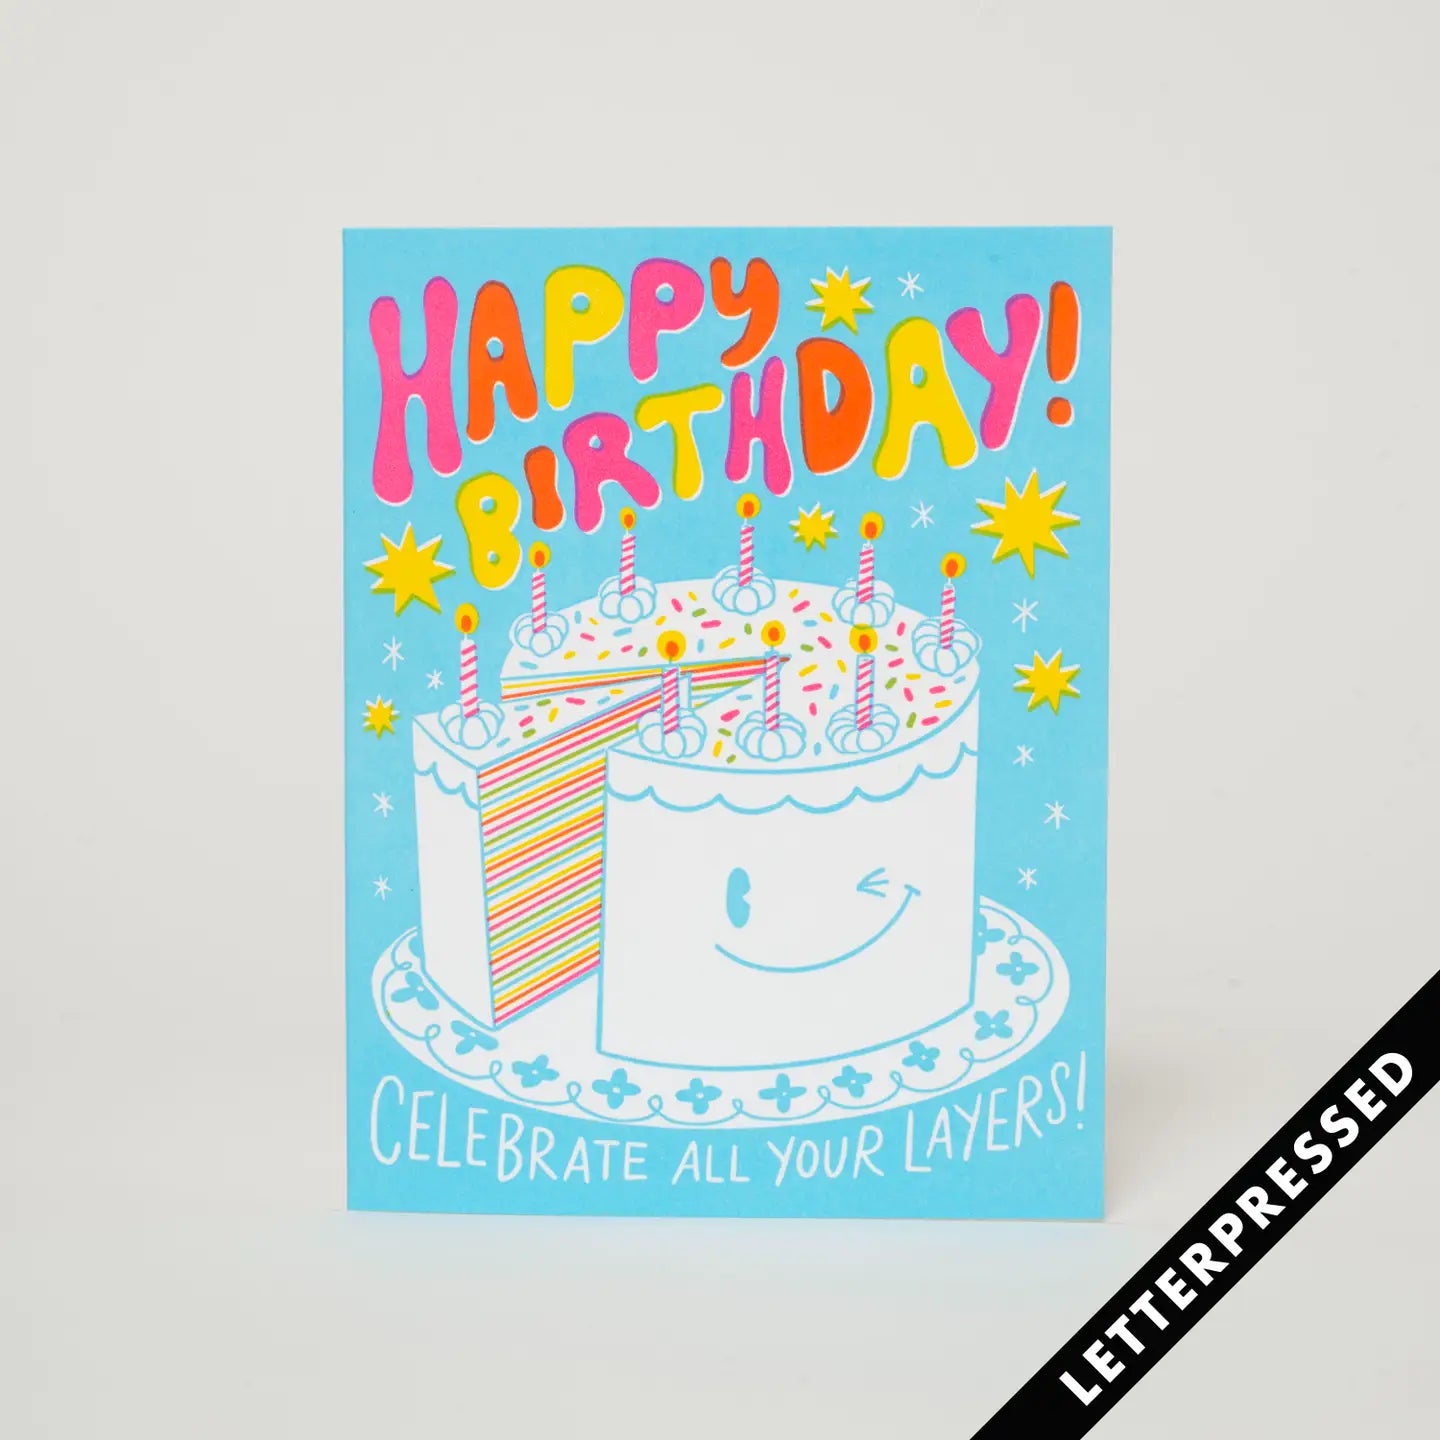 Happy Birthday Cake Layers Card